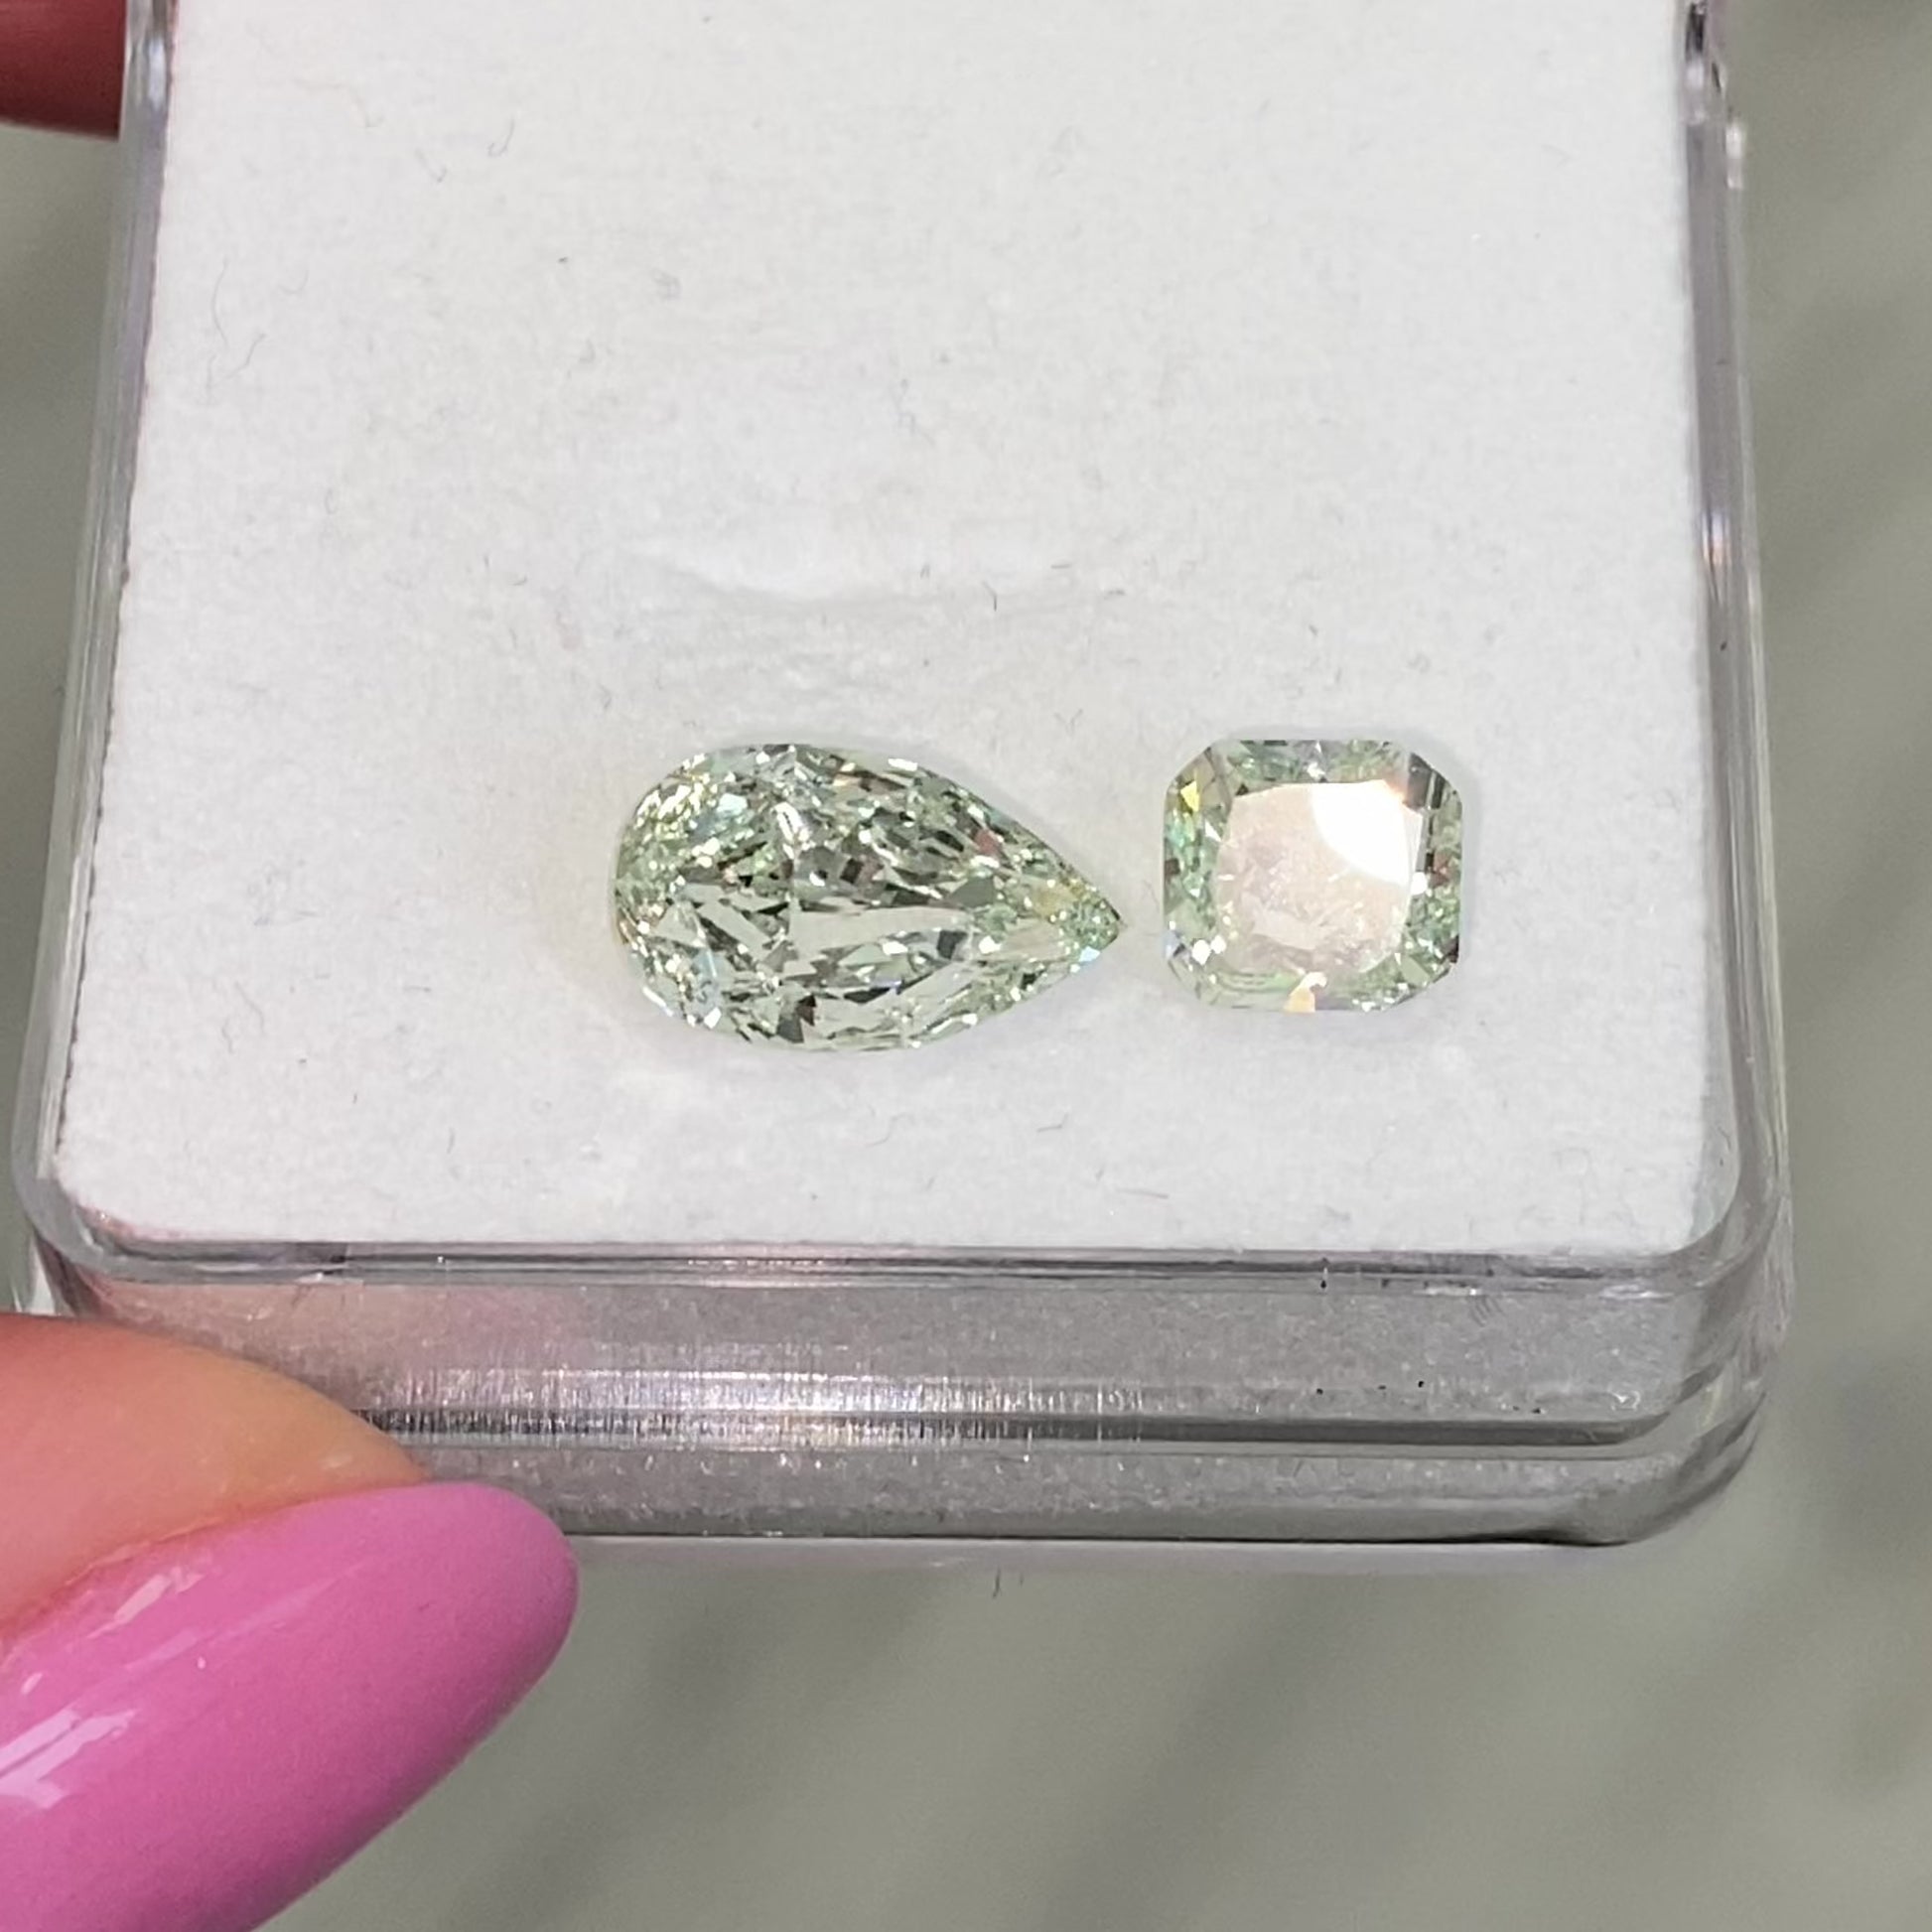 1.17 Carats Radiant Cut Diamond Fancy Yellowish Green VS1 Clarity Very Good + Fair Cutting No Fluorescence GIA Certified Diamond